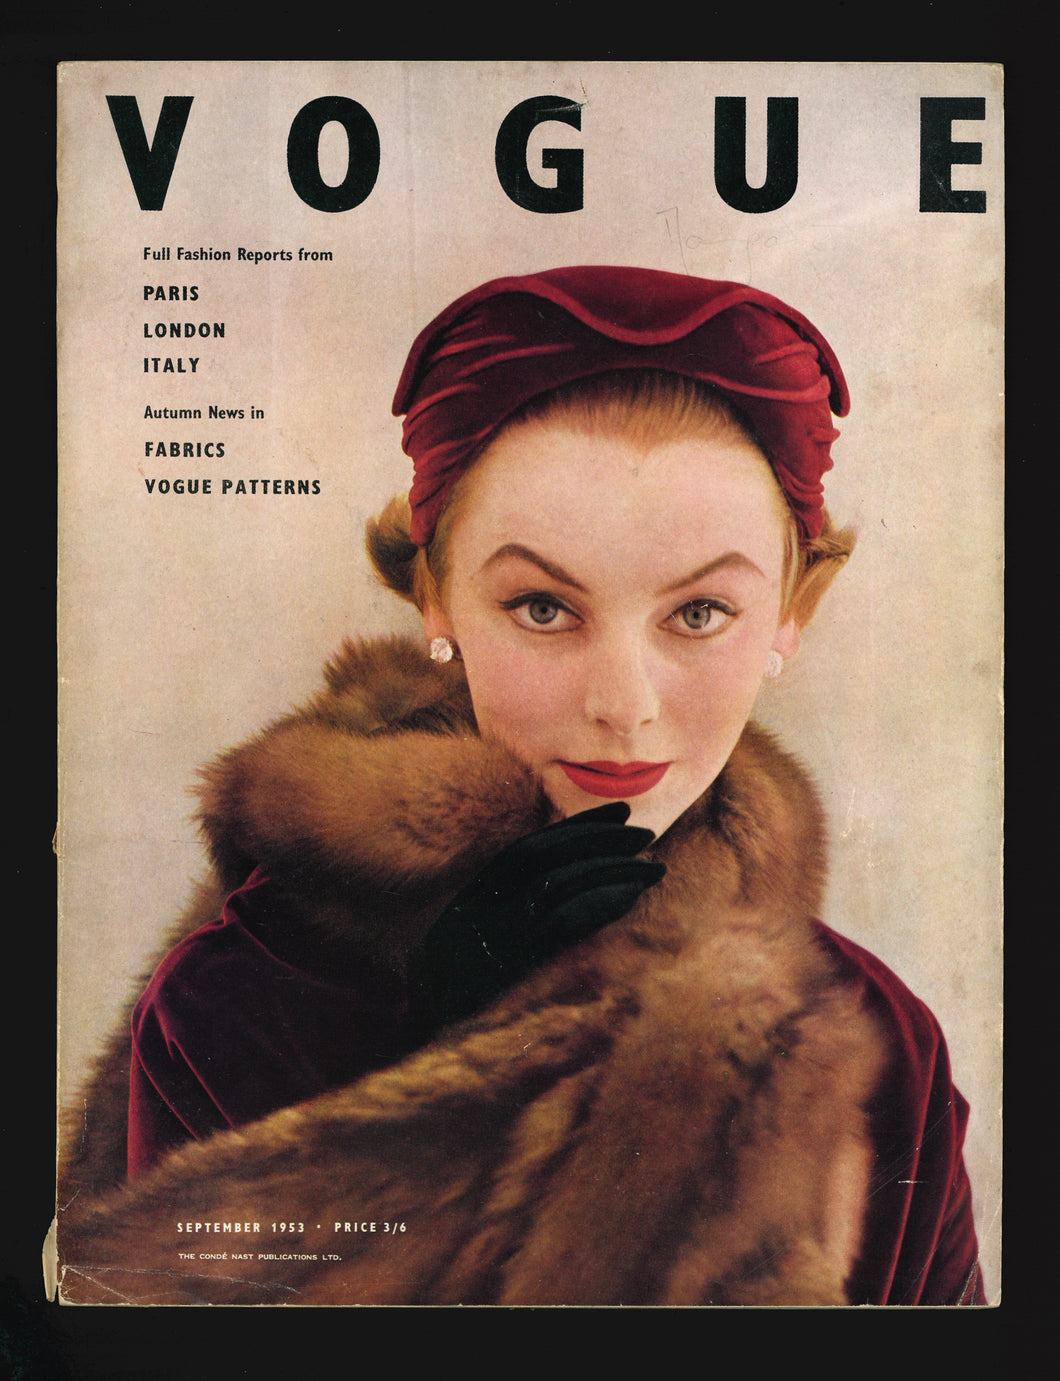 Vogue UK Sept 1953